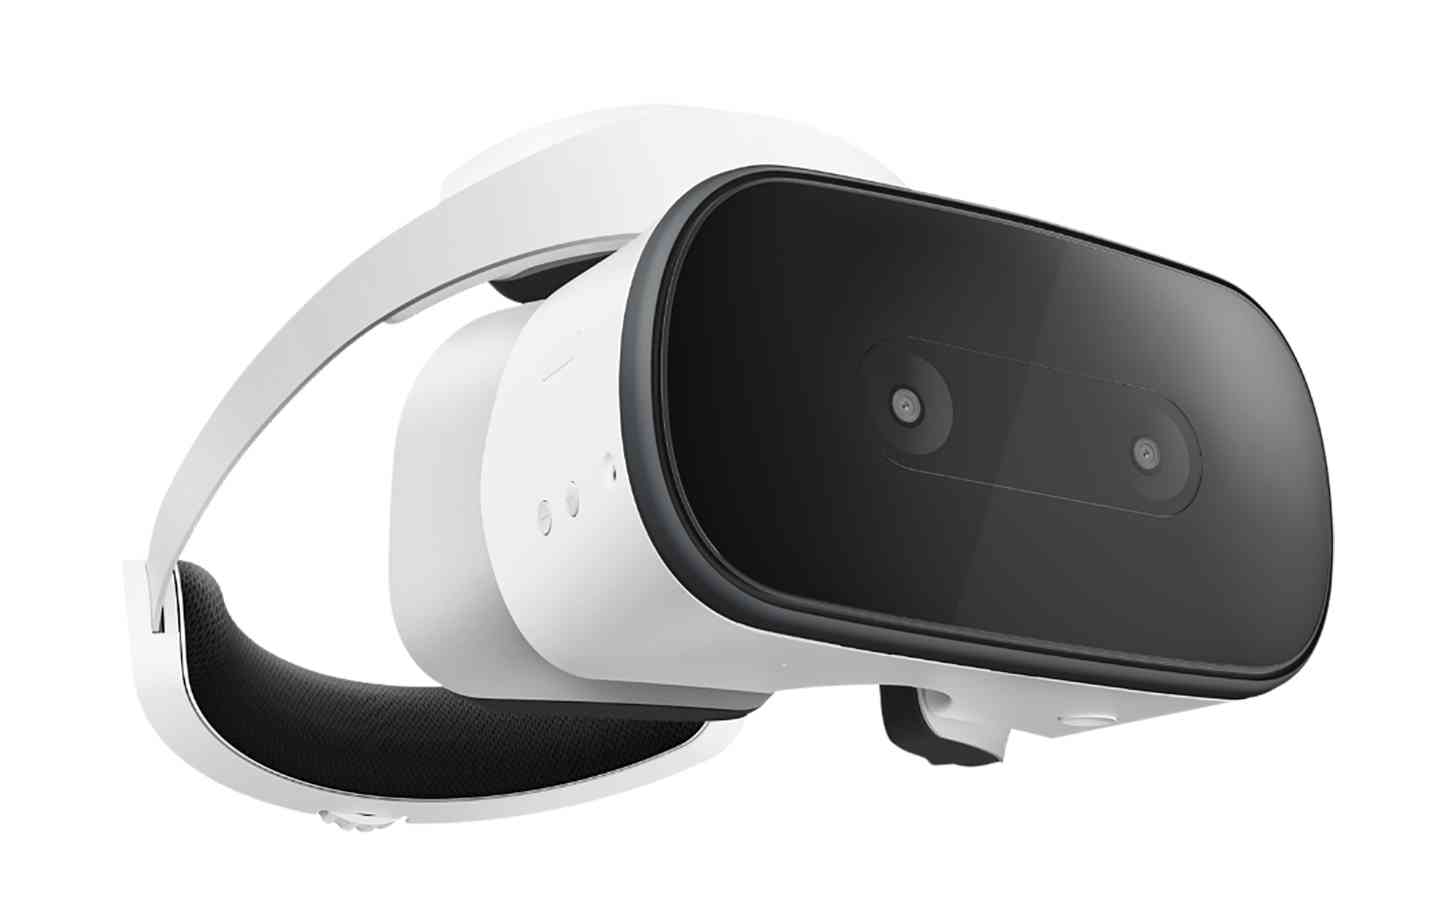 Lenovo Mirage Solo standalone Google Daydream VR headset angle view